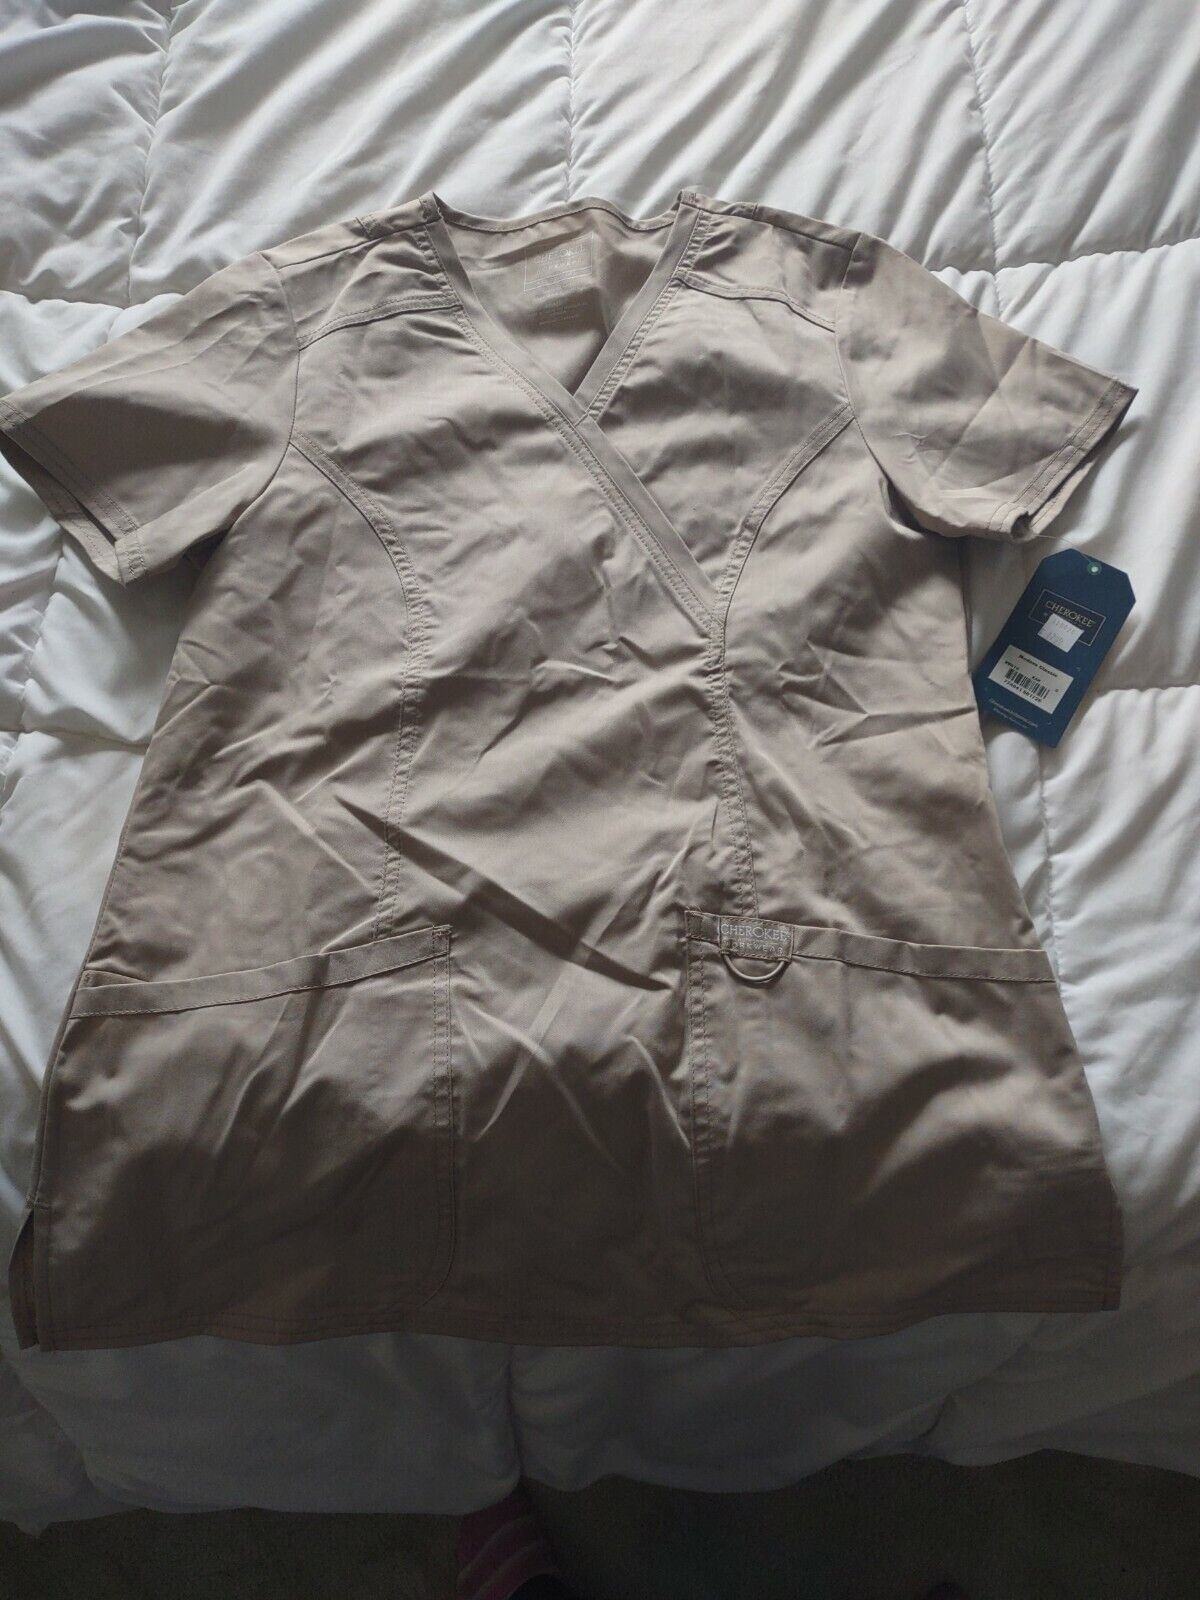 Primary image for Cherokee Khaki Size Small Women's Nursing Scrubs Shirt-Brand New-SHIPS N 24 HRS